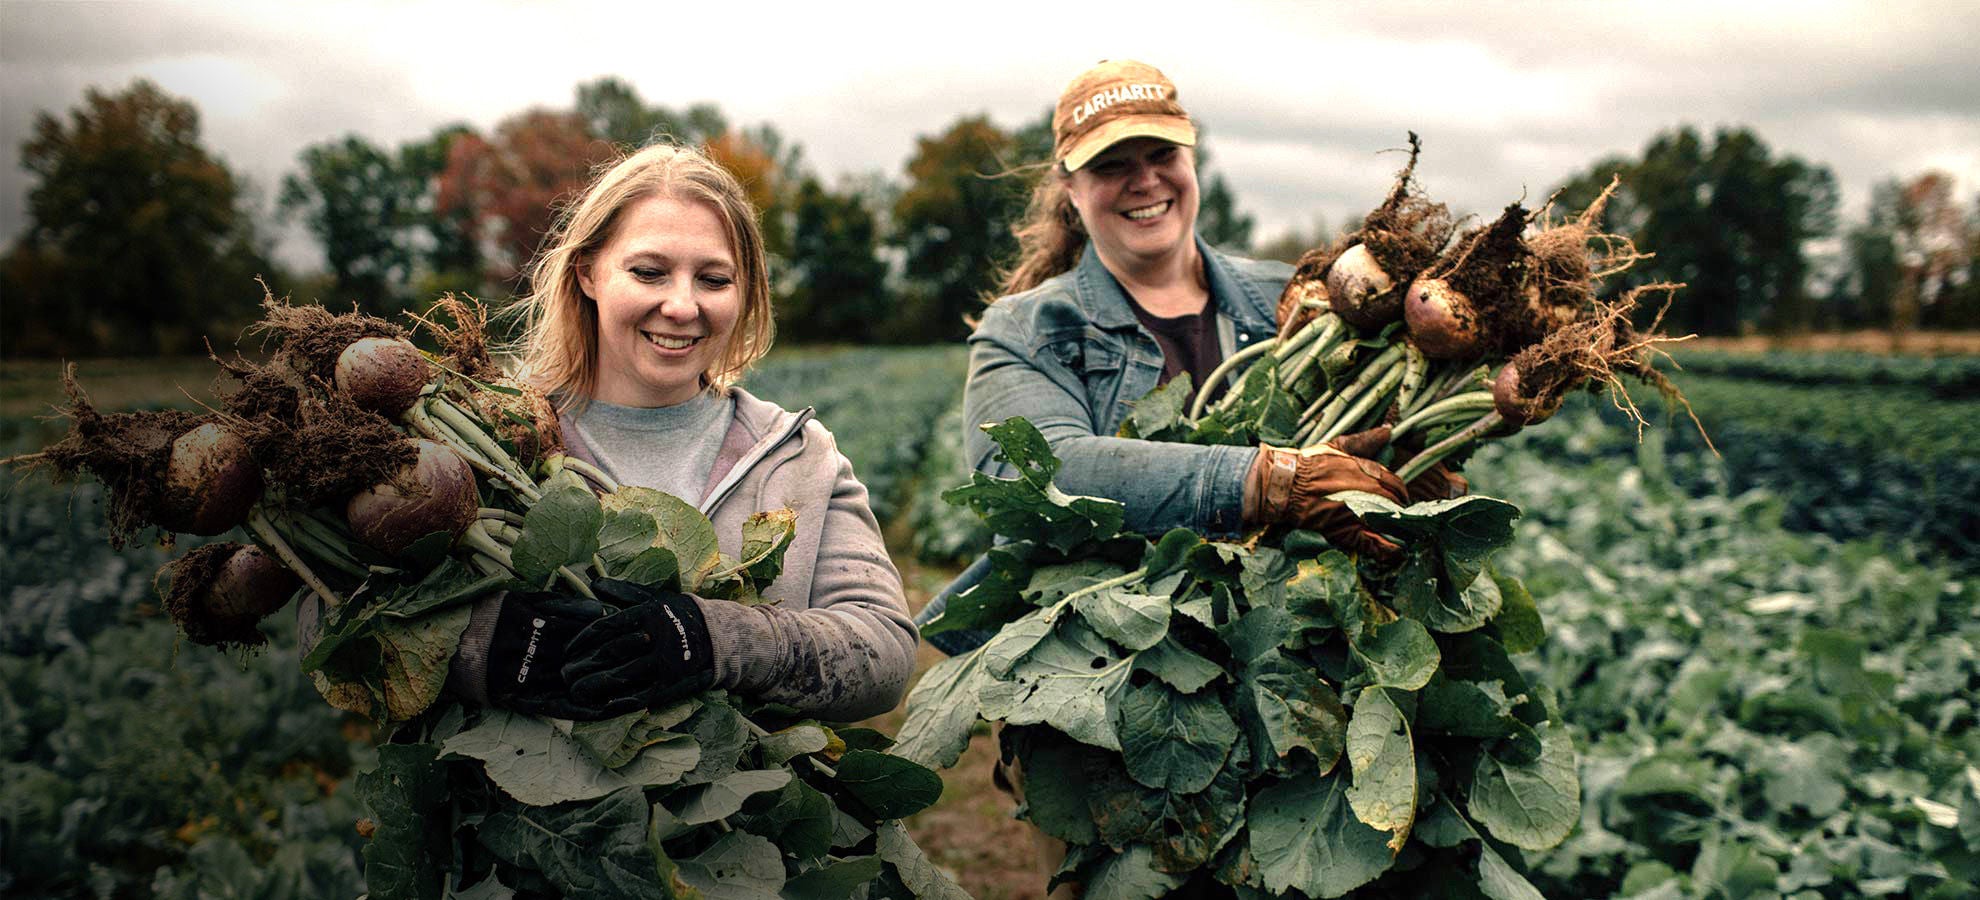 two women farmers holding crops